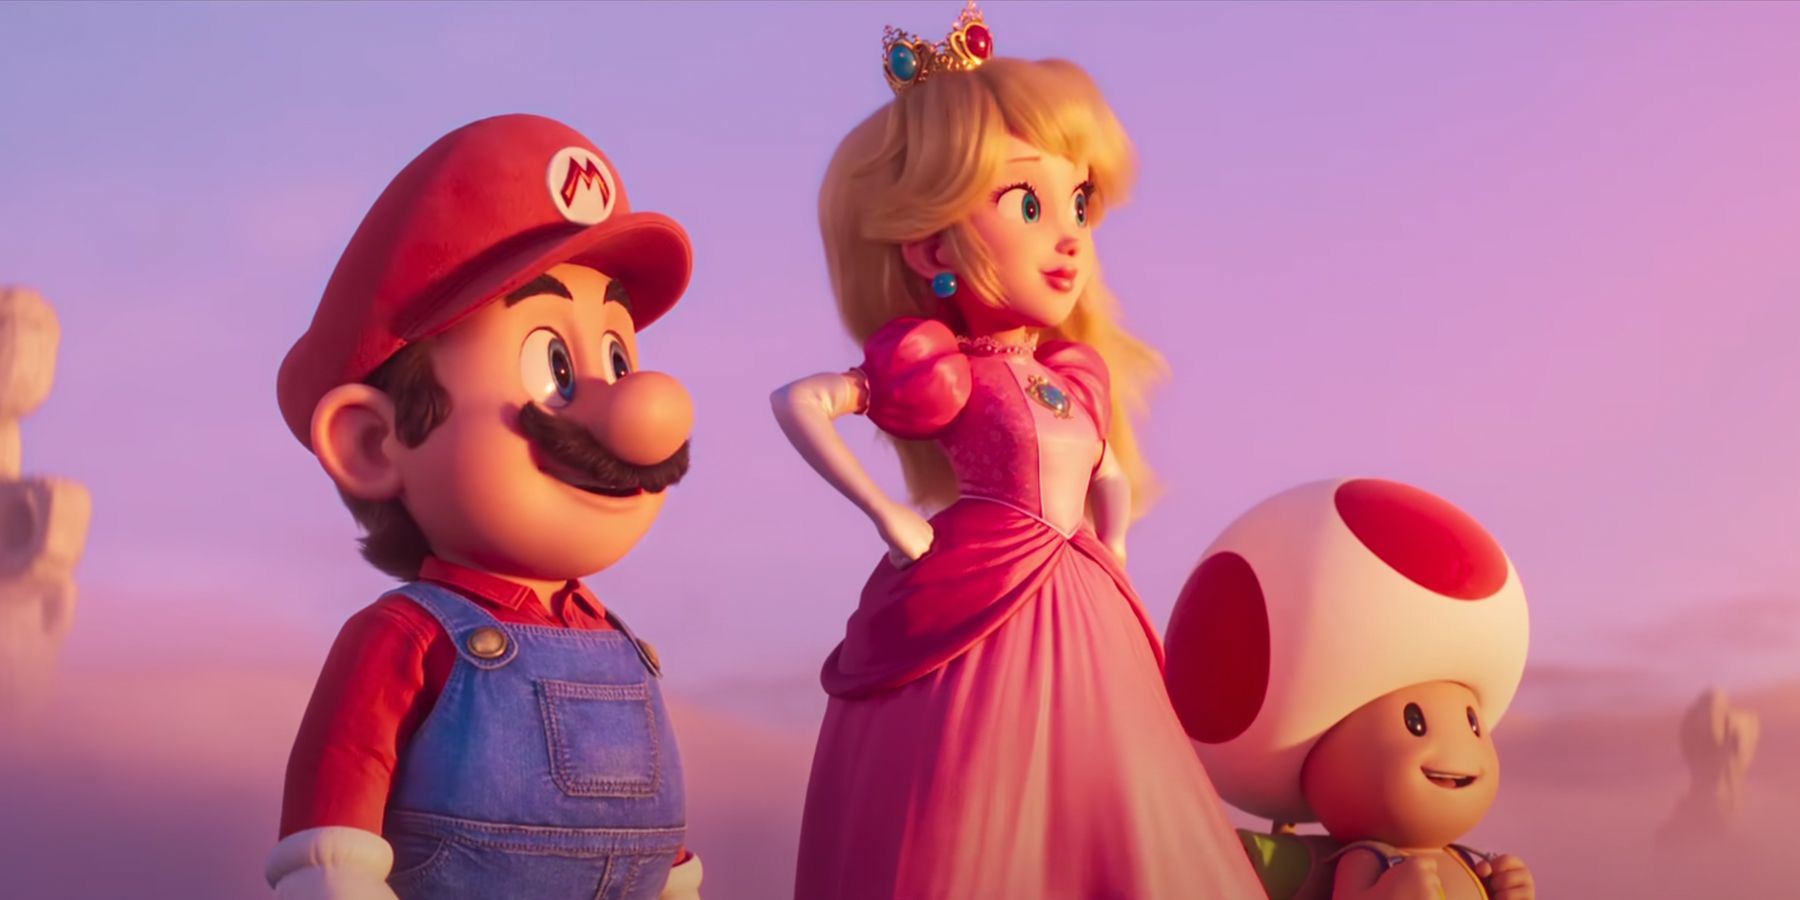 The Super Mario Bros Movie - Peaches (EASY) (MIDI) - Claivert's